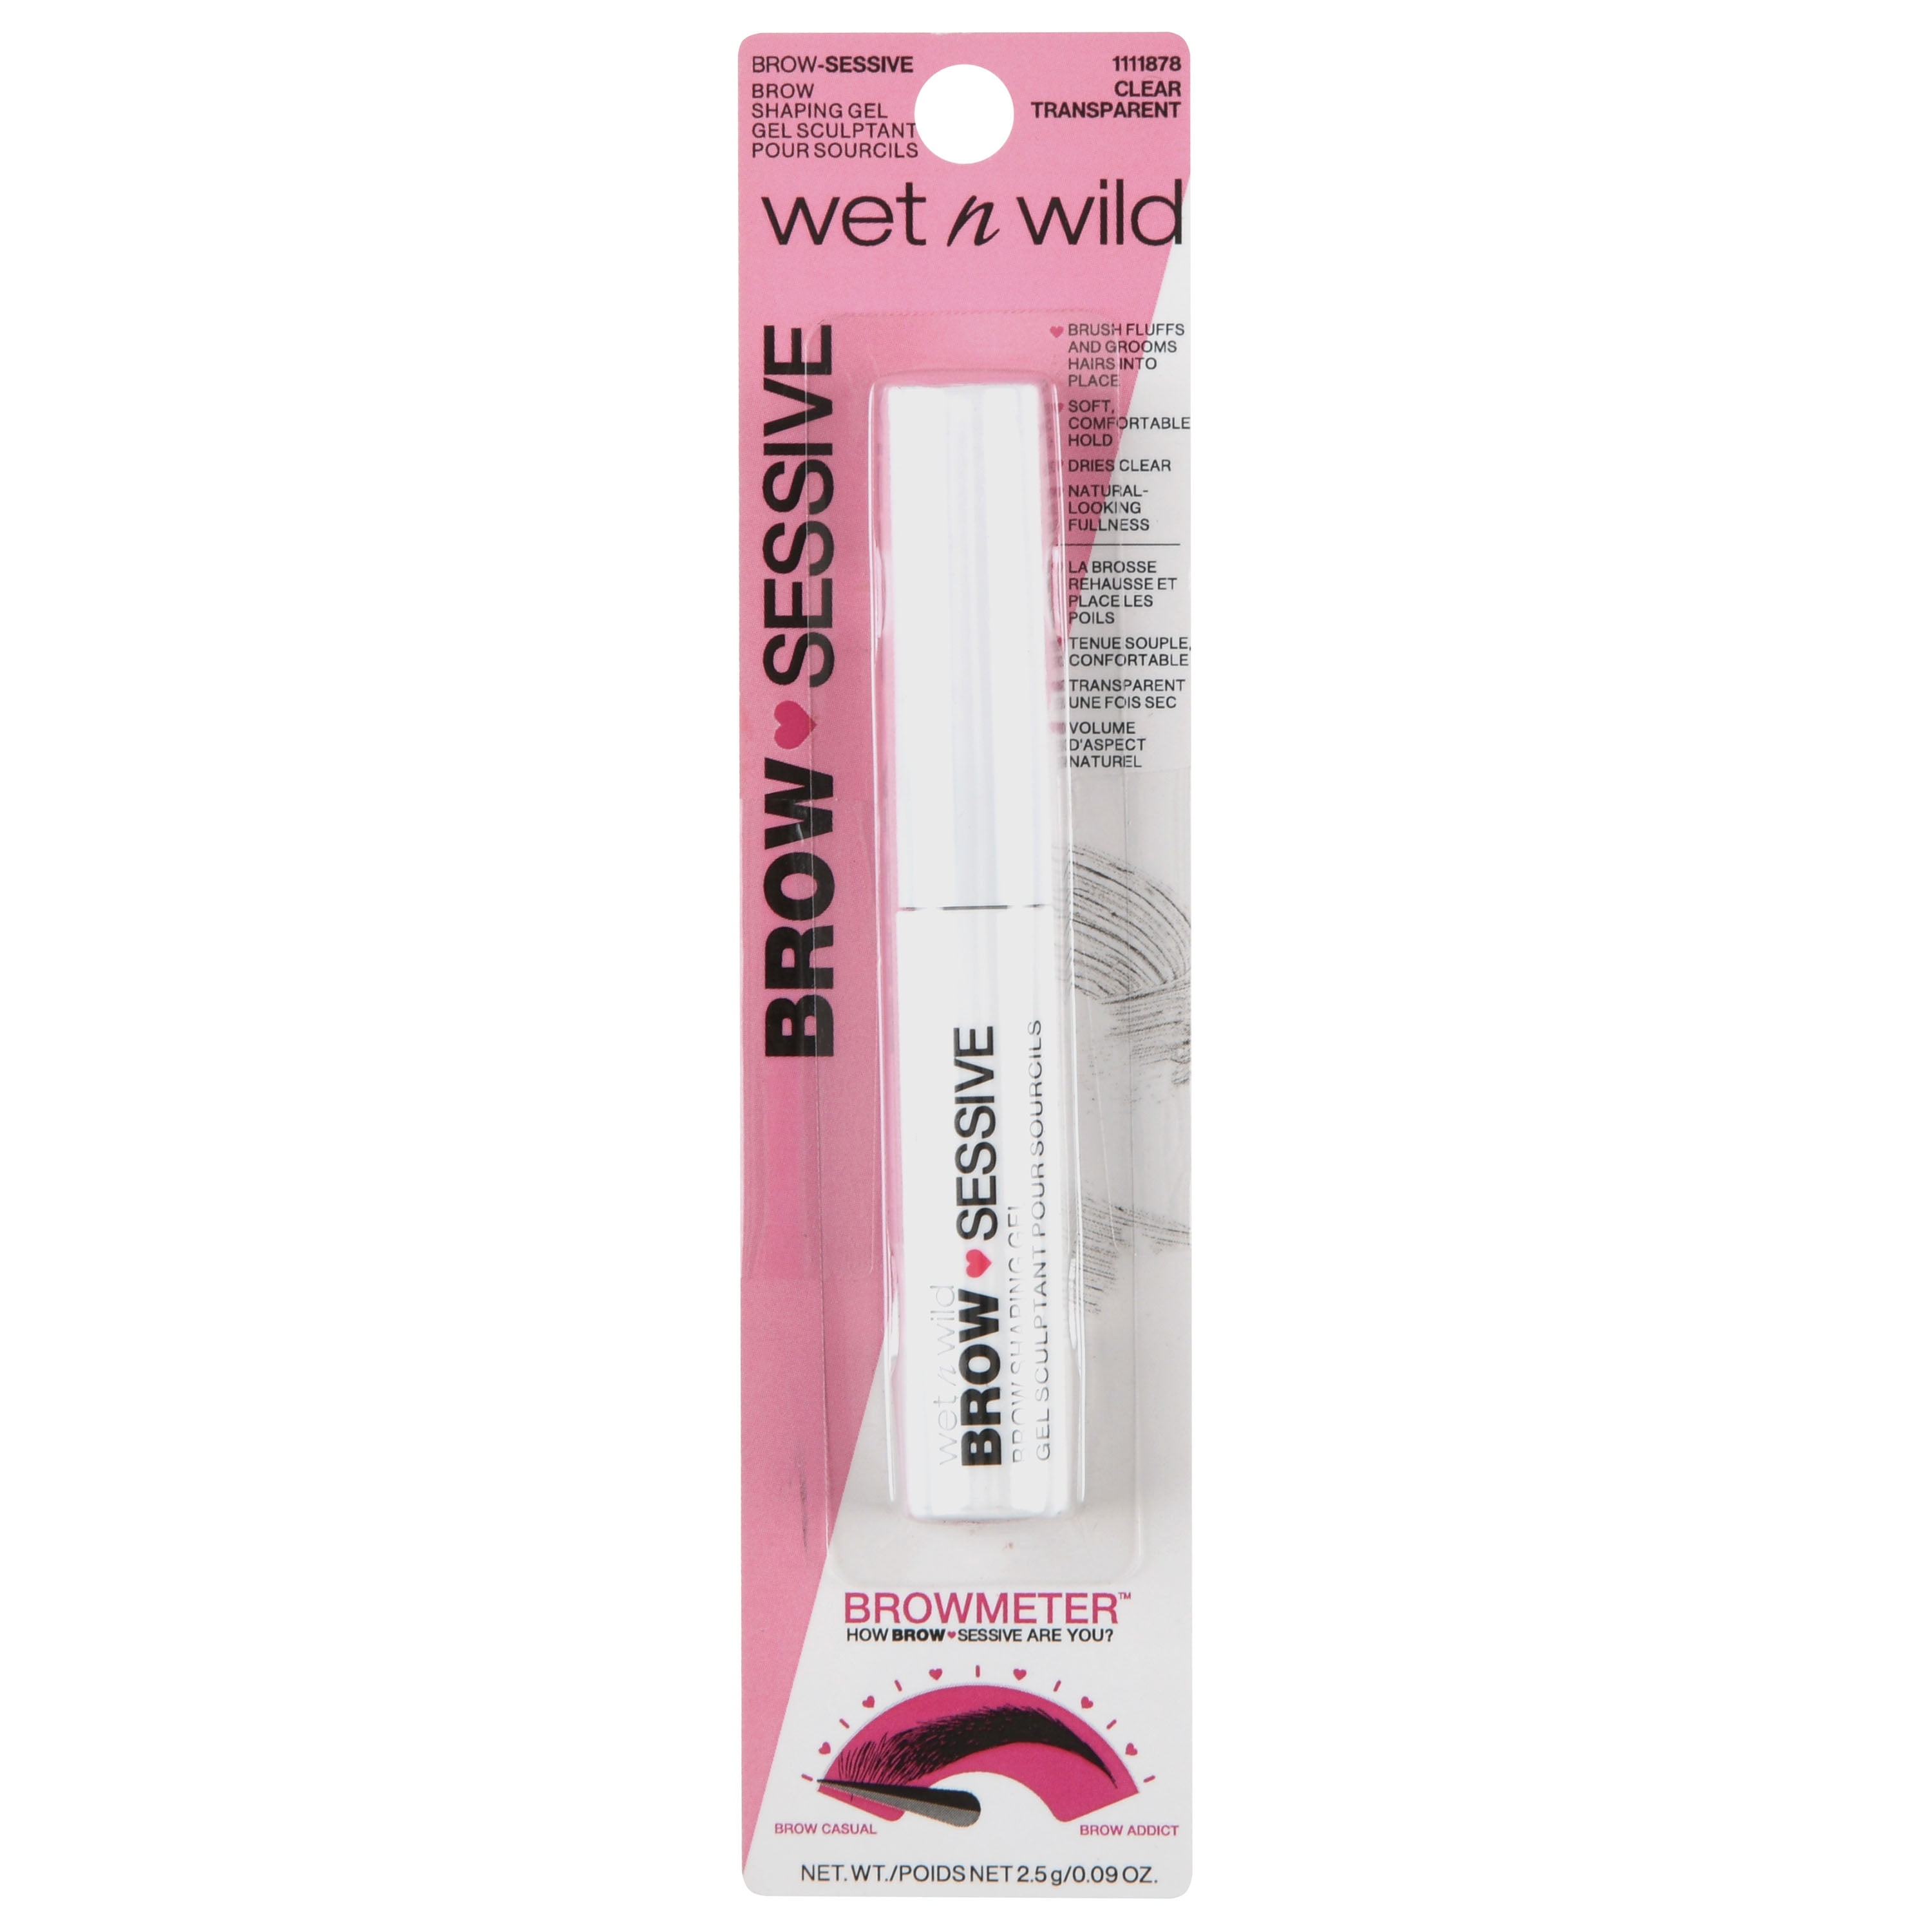 wet n wild Brow-sessive Eyebrow Shaping Gel, Clear, 0.1 fl oz